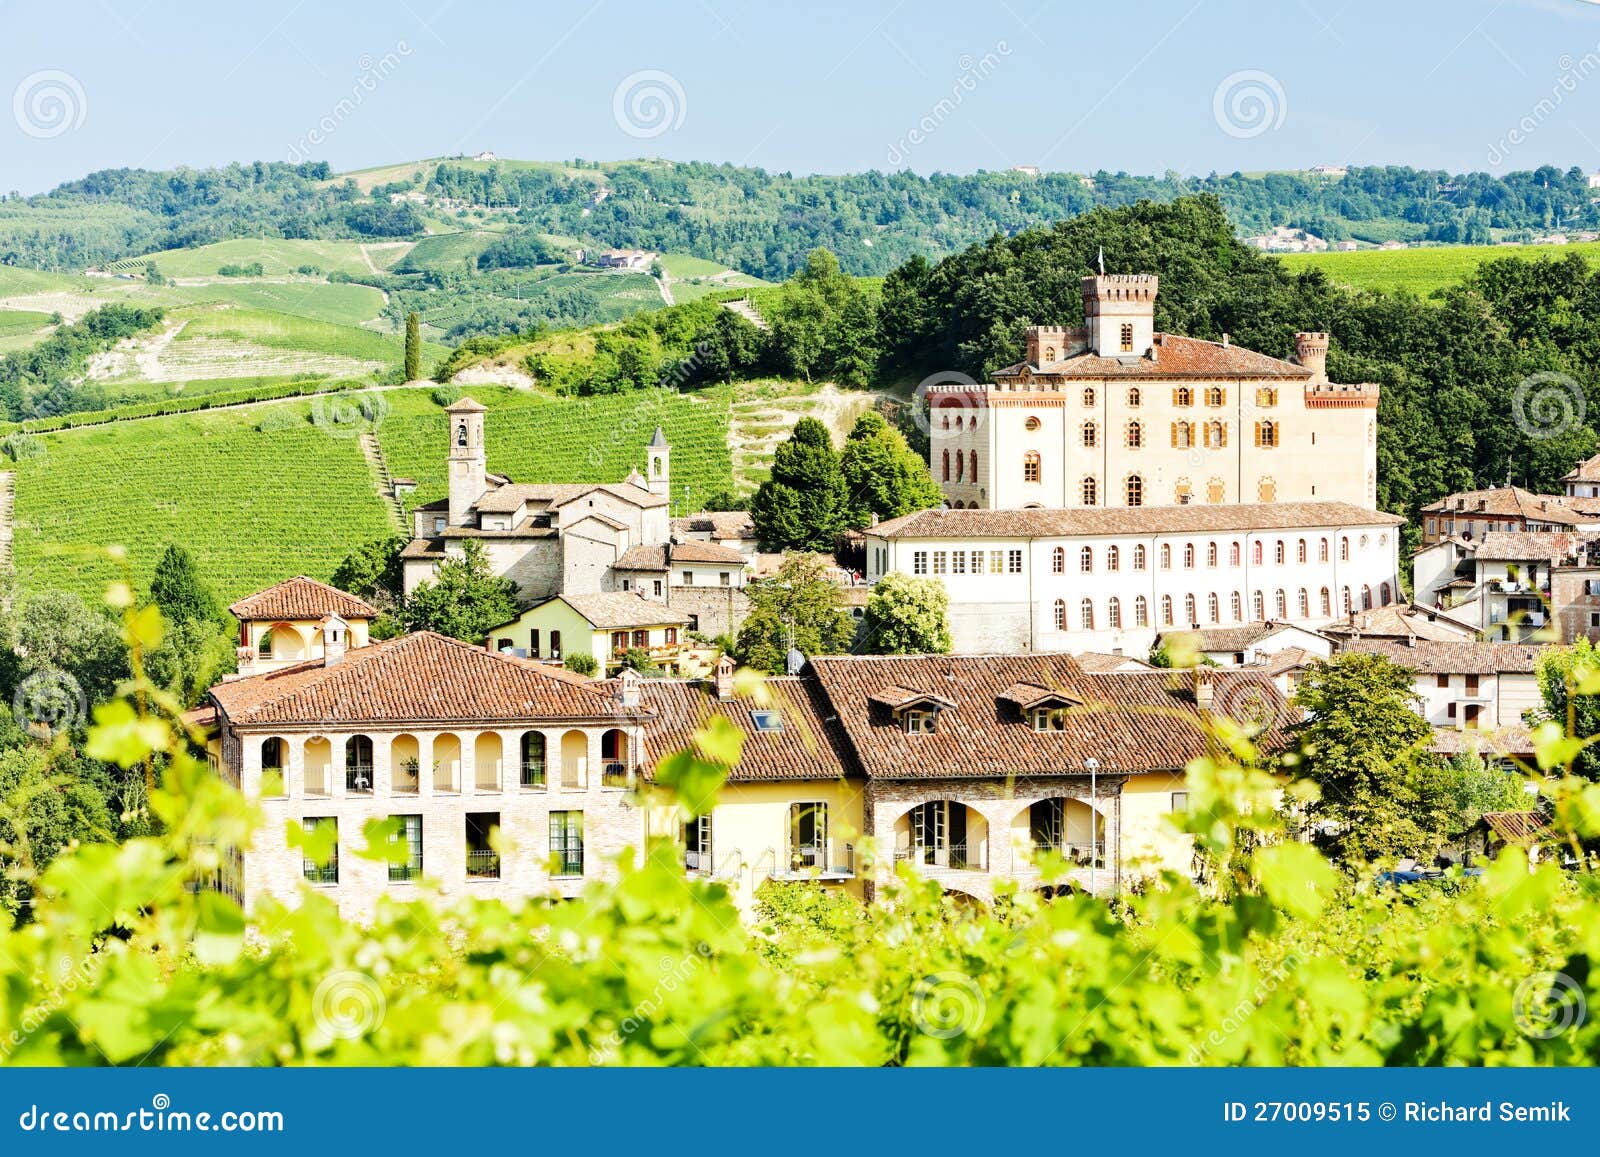  Barolo Piedmont Italy  Stock Photos 1 586 Images